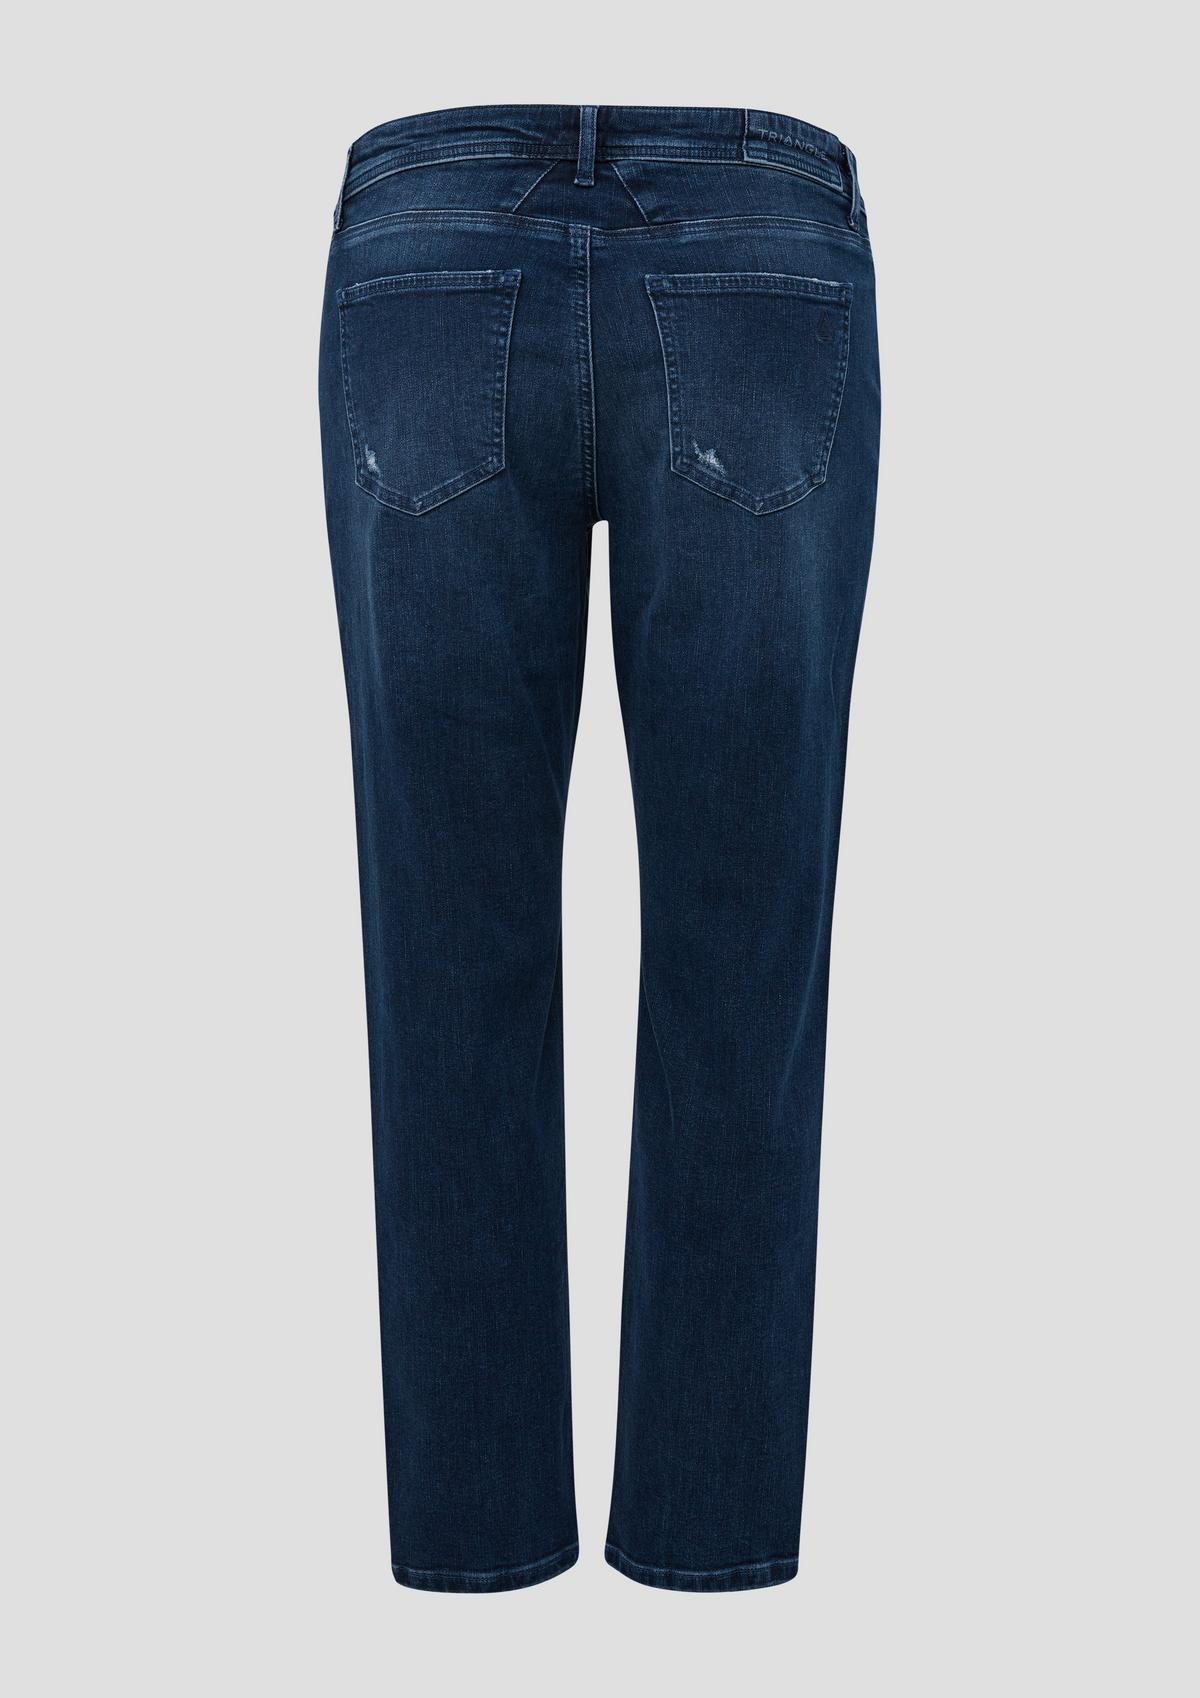 s.Oliver Jeans / regular fit / mid rise / straight leg / vintage look